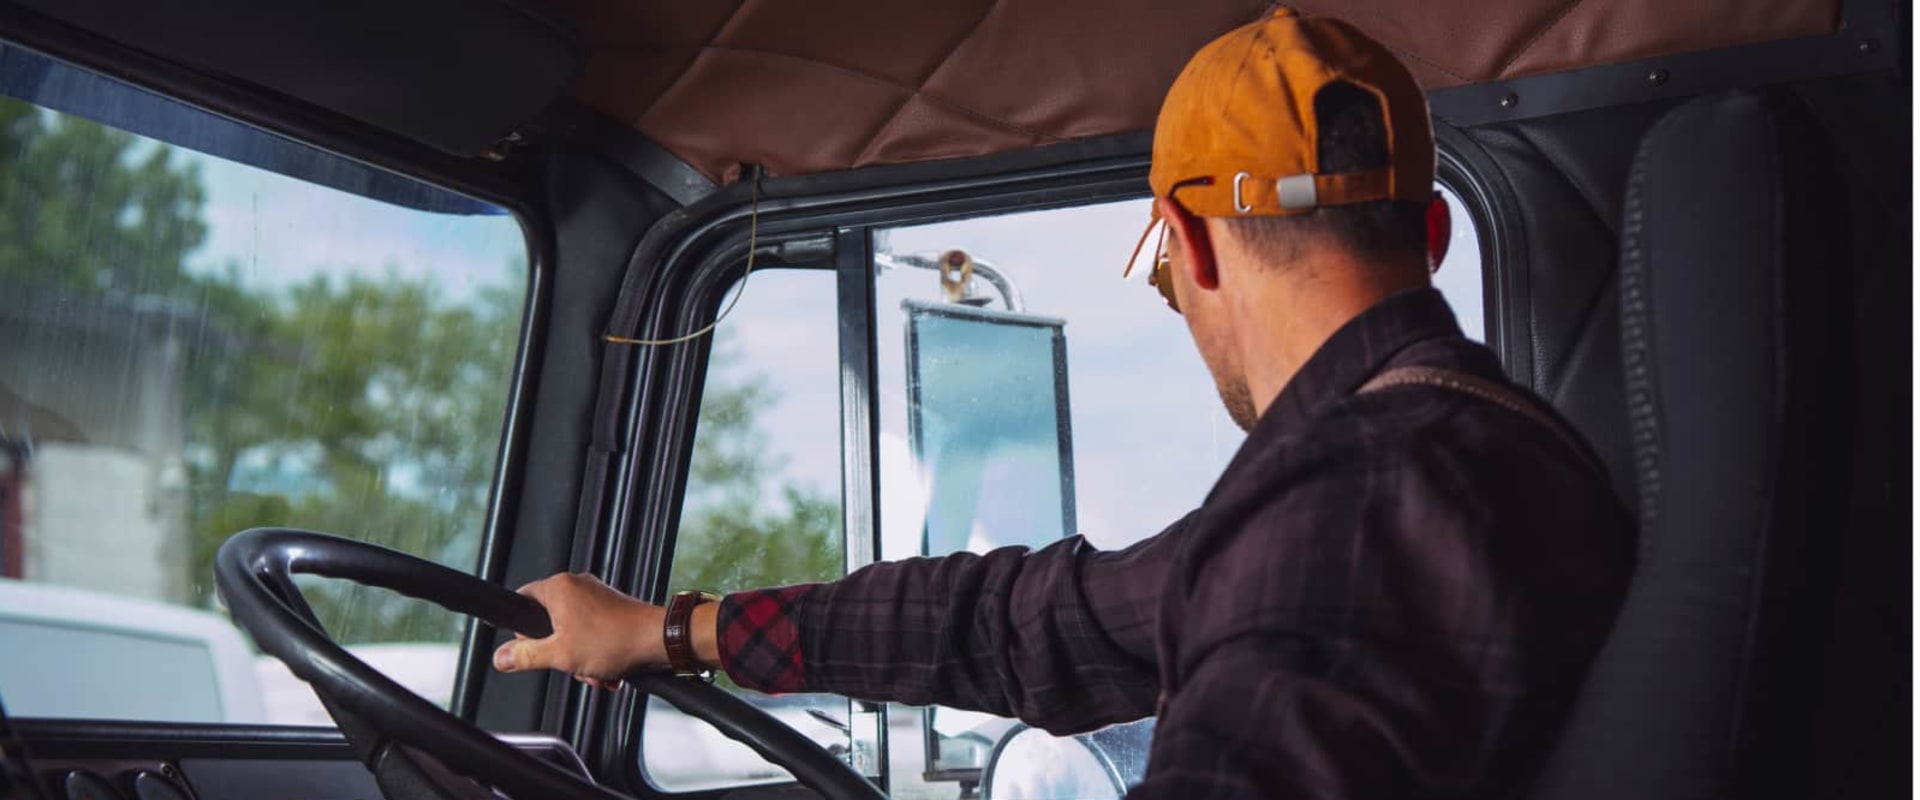 Is Trucking Still a Good Career Choice?